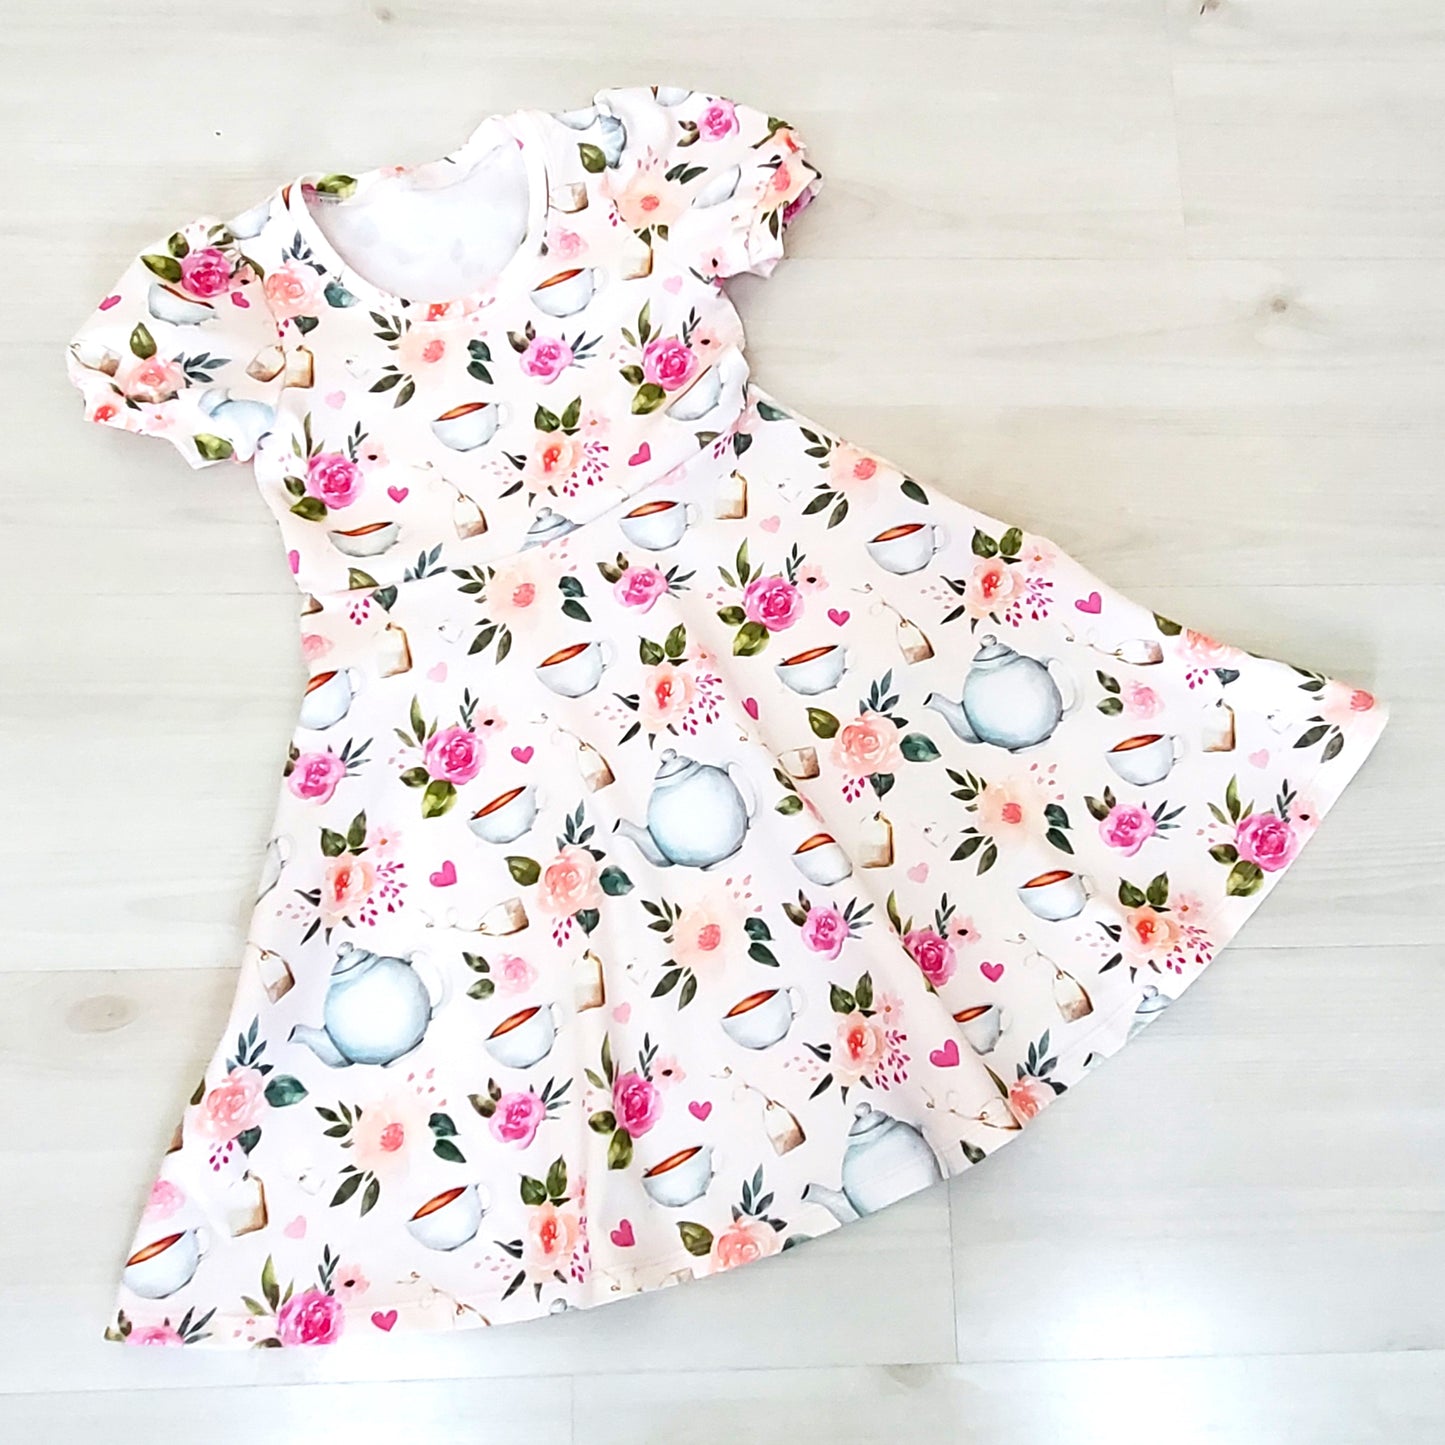 "Tea" dress for children in organic cotton